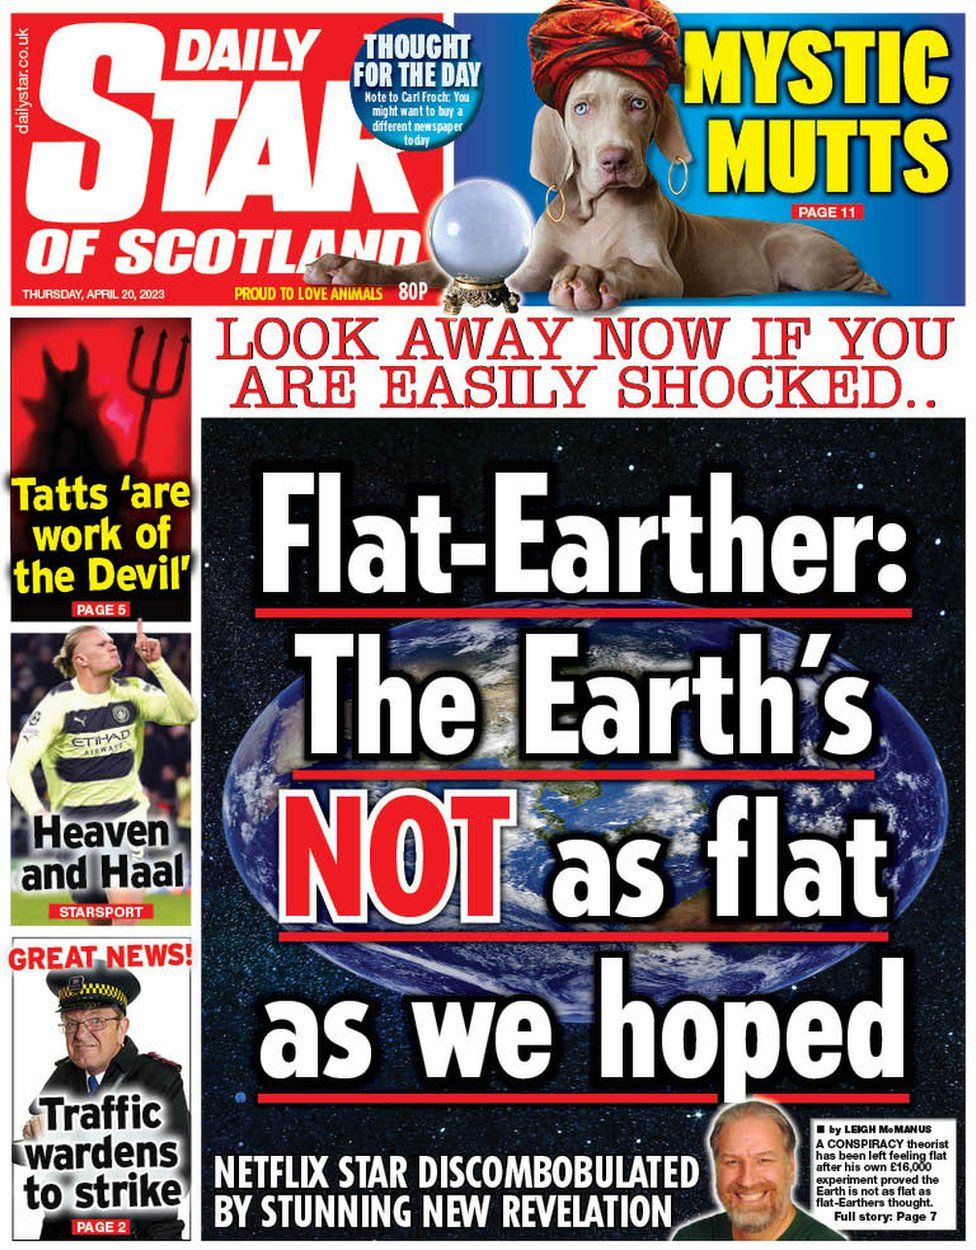 Daily star of Scotland